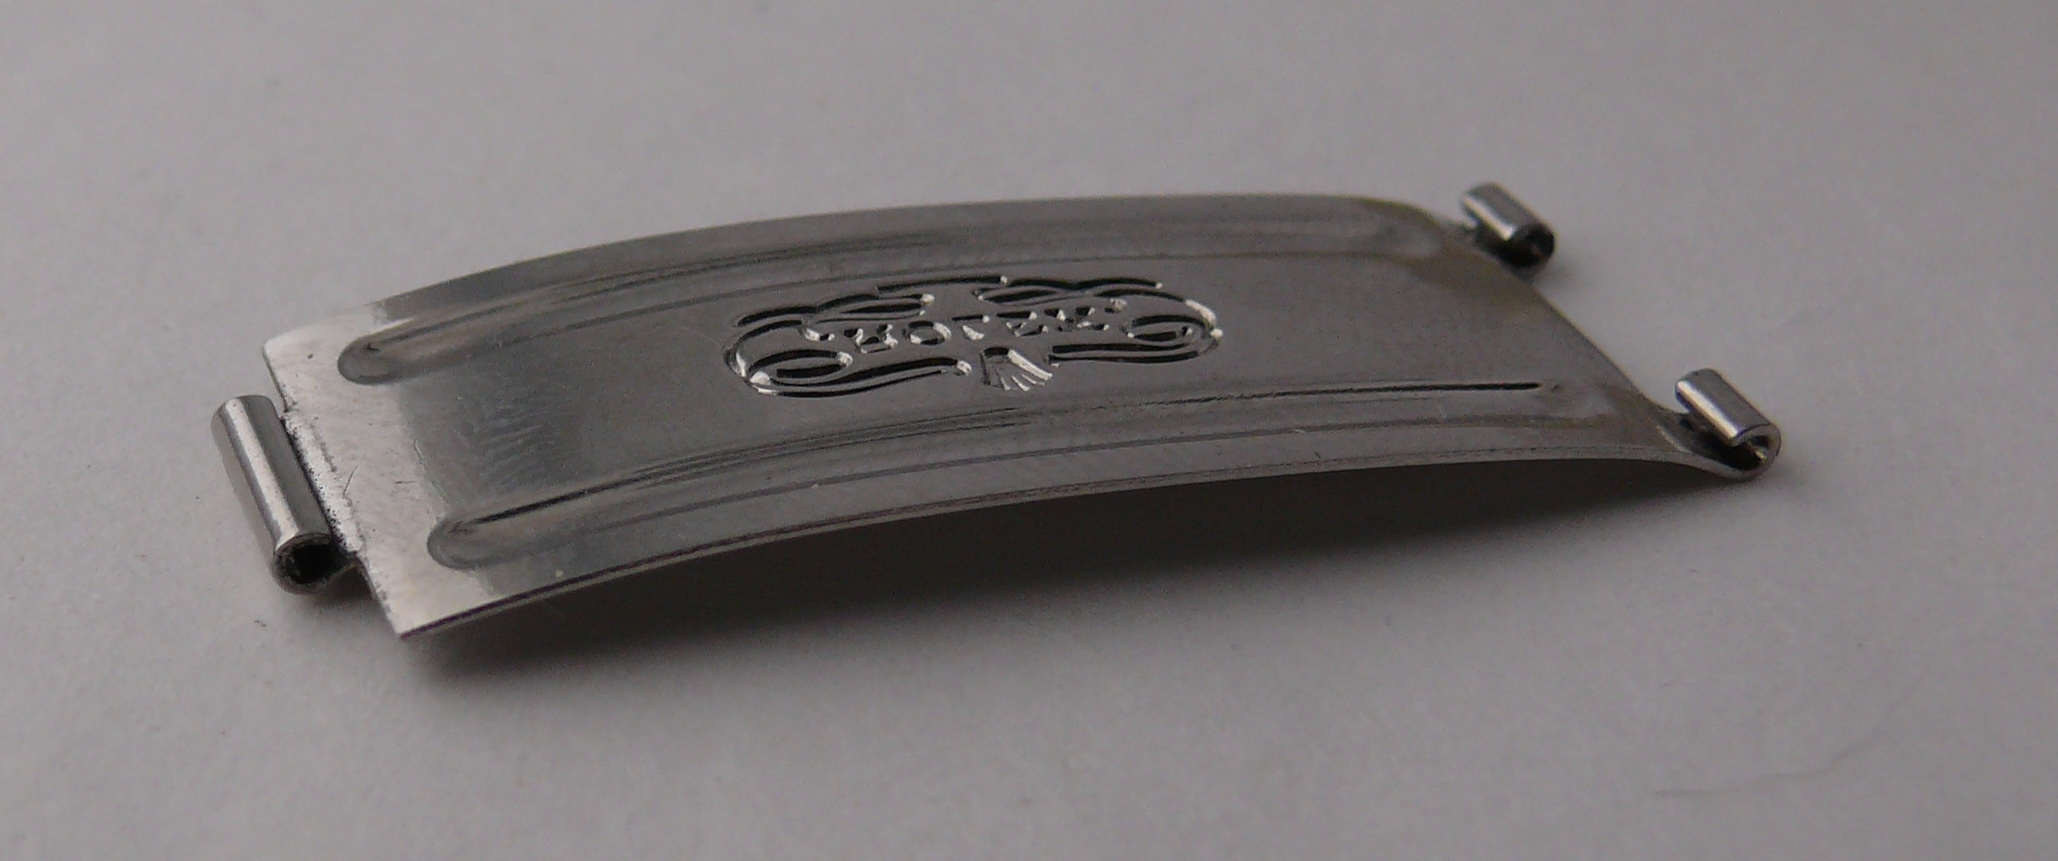 Vintage Rolex 20mm 93150 Flip Lock Bracelet Clasp Part. Date code J8 = 1985 - Image 4 of 5